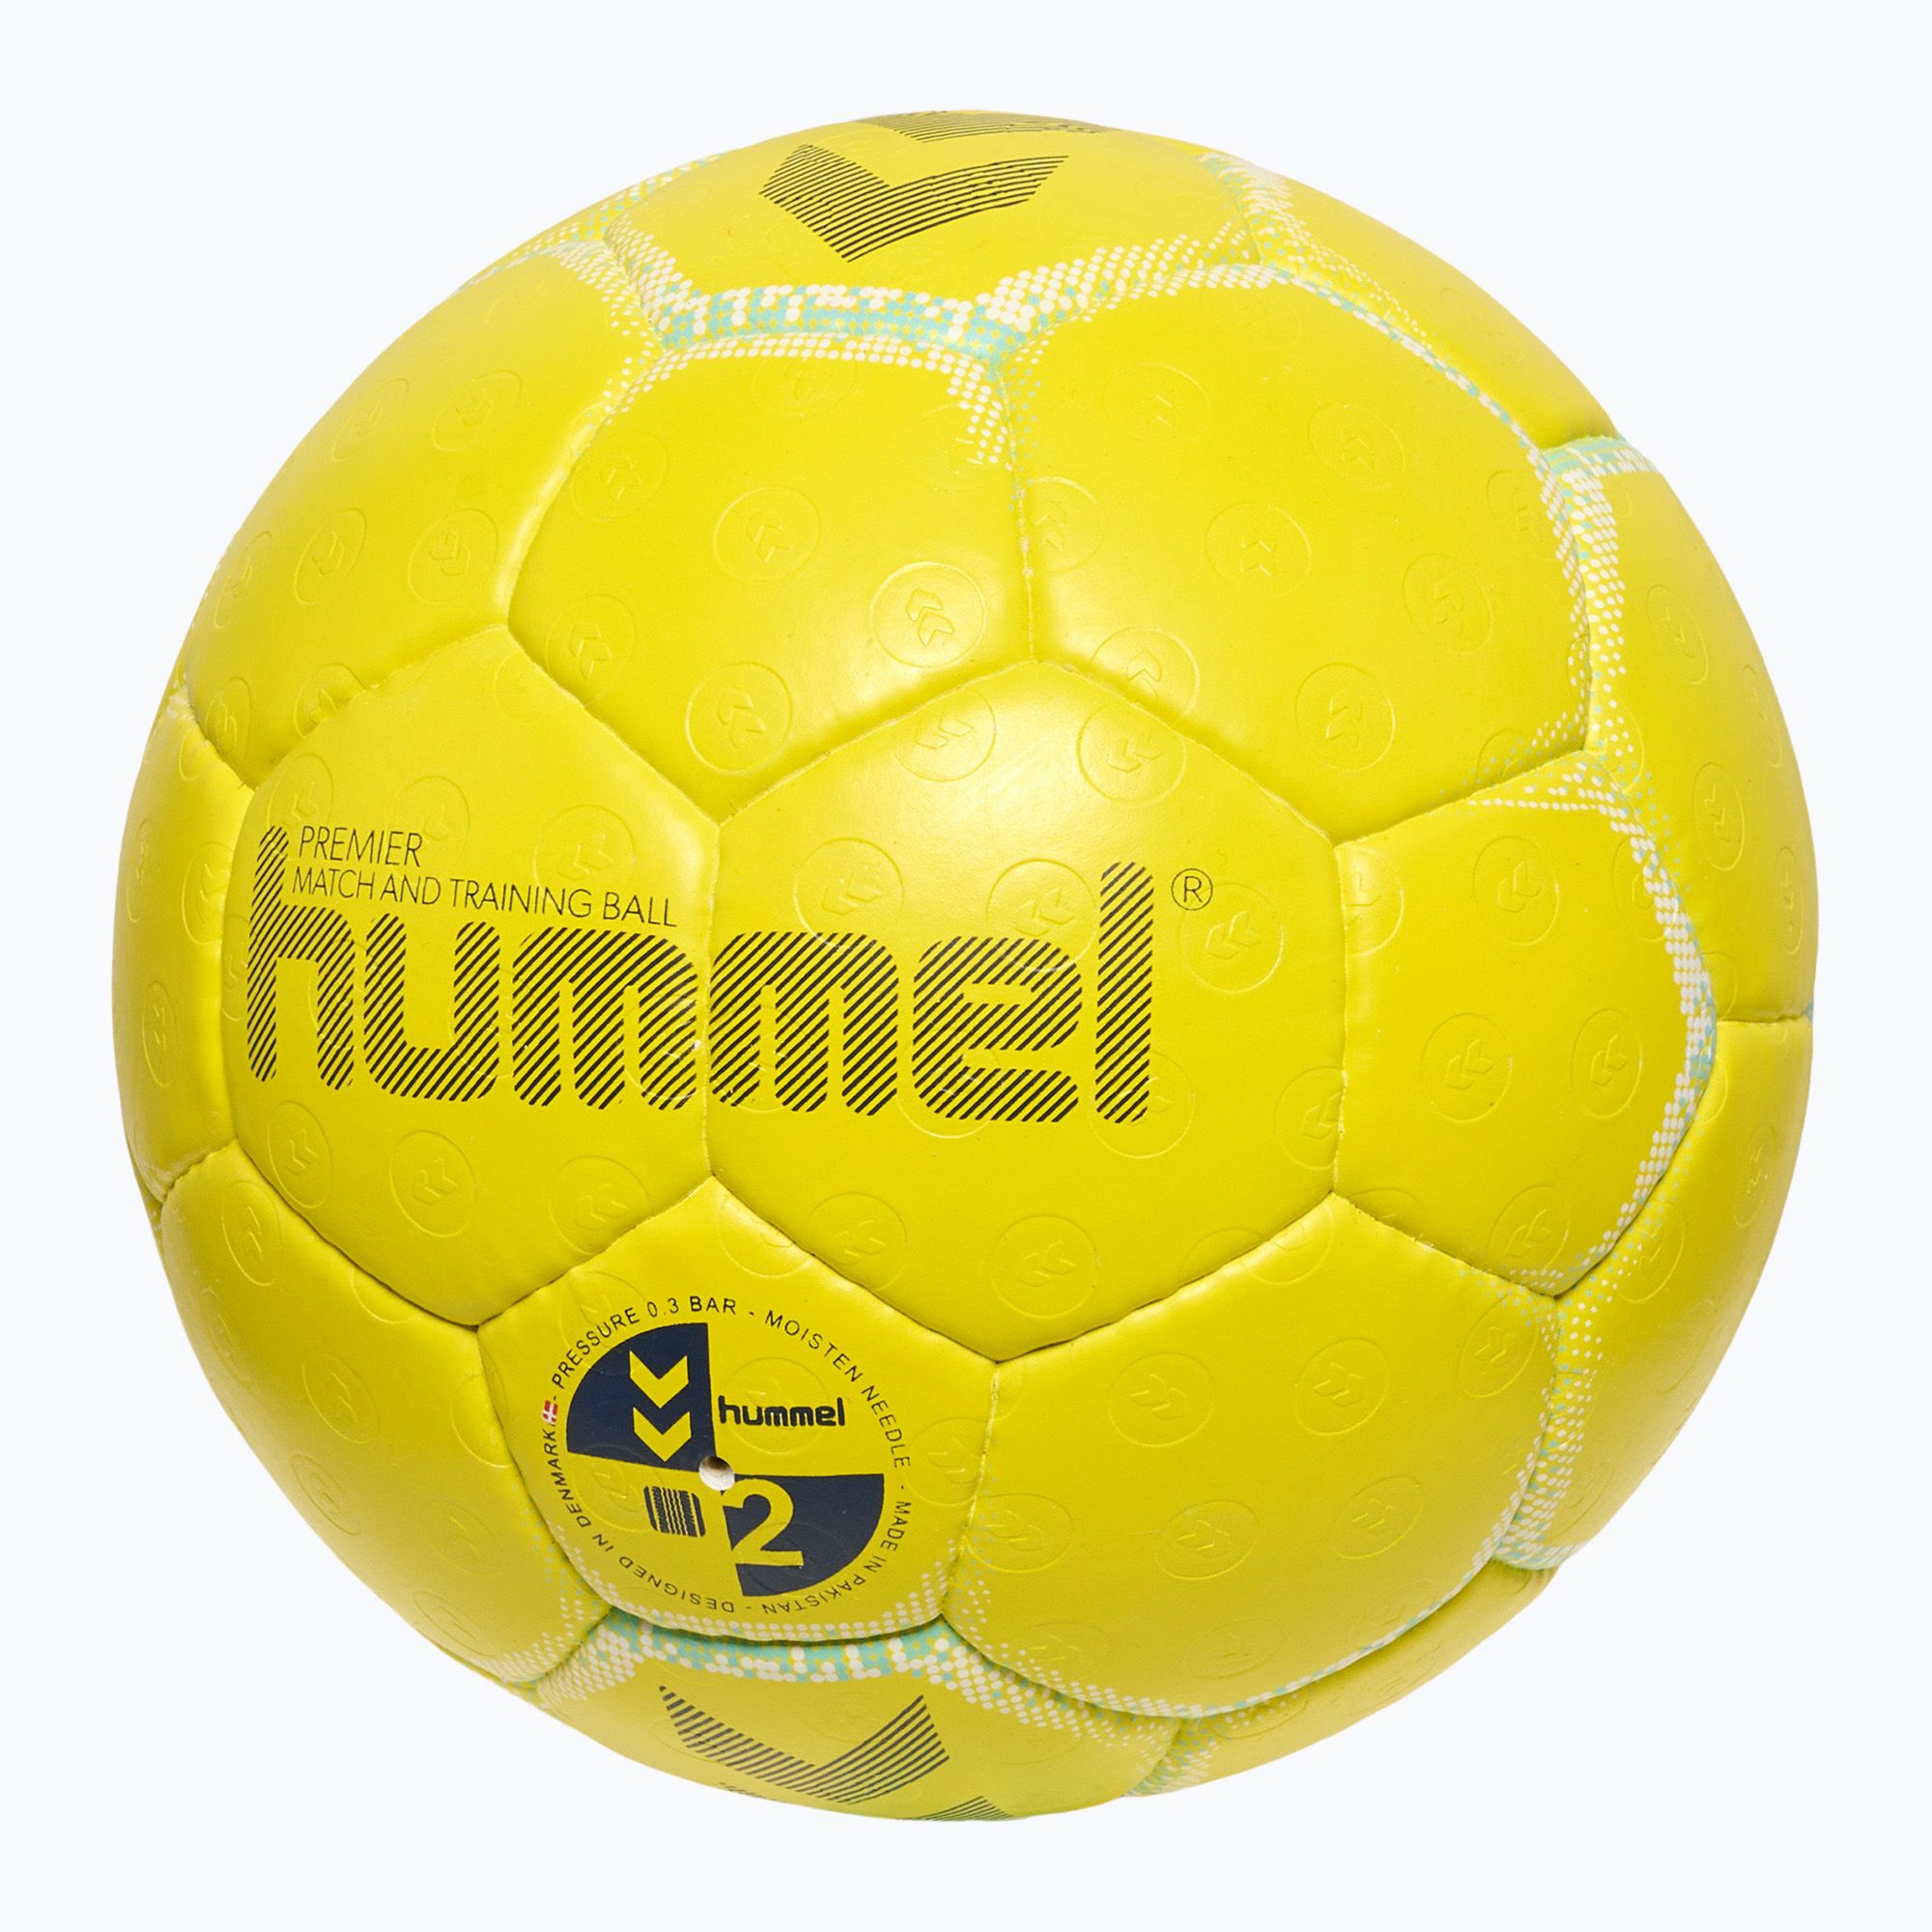 Hummel Premier HB handball yellow/white/blue 2 size